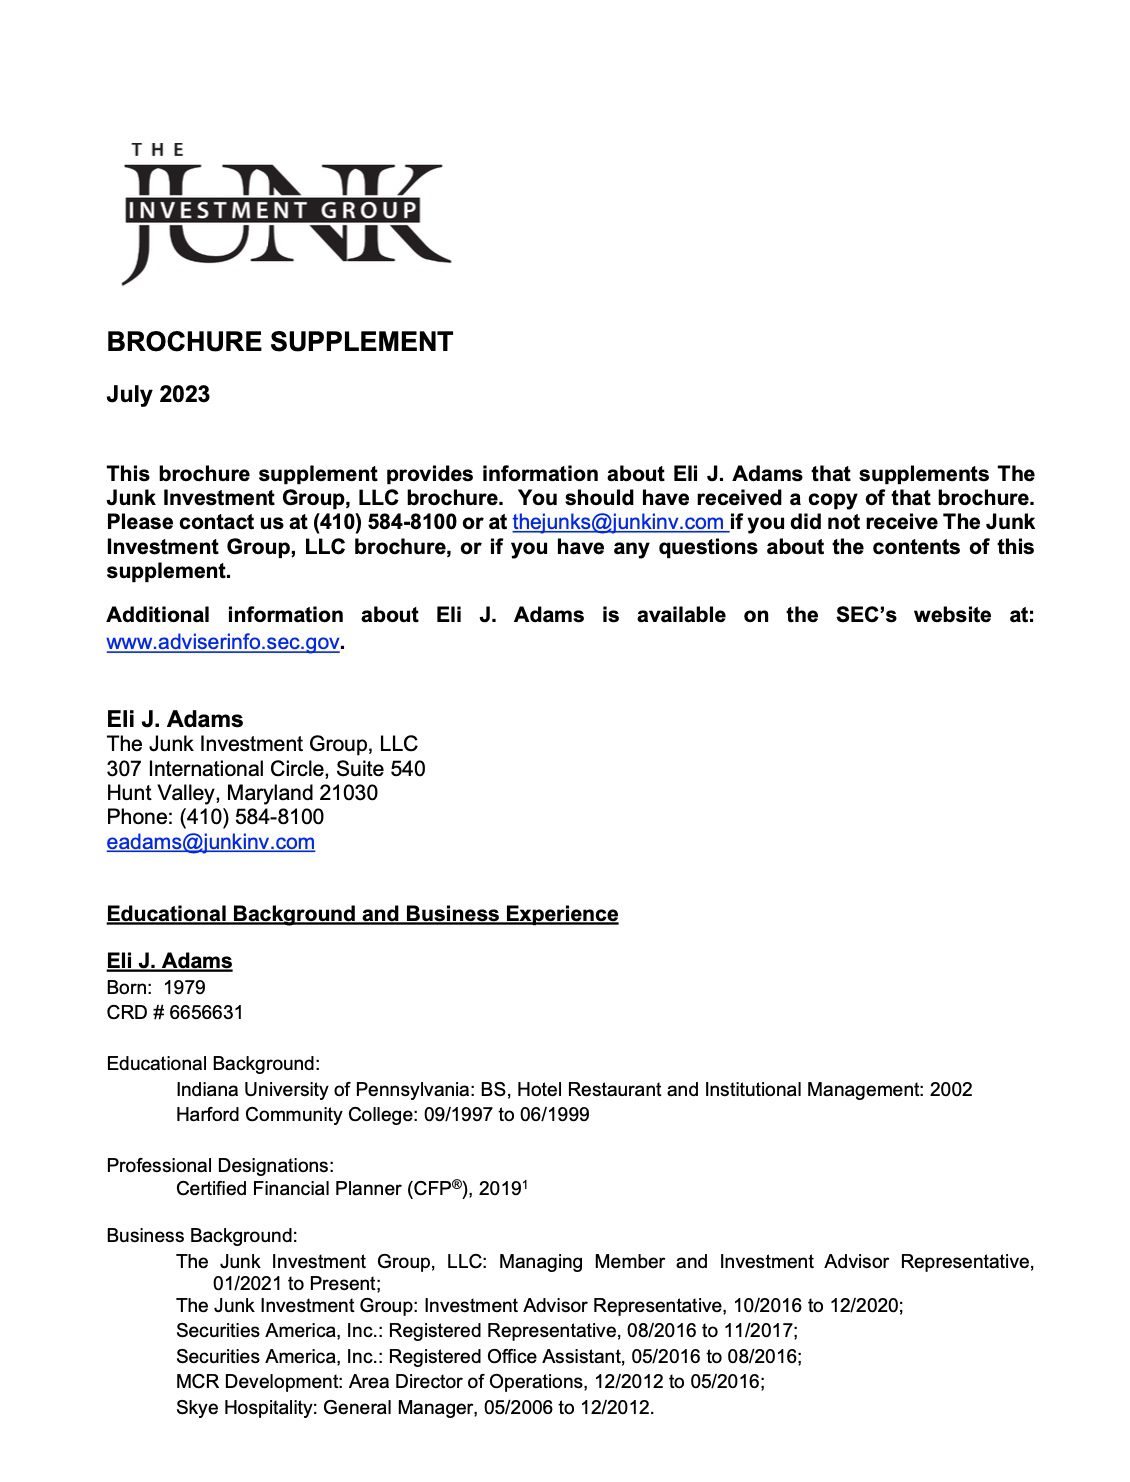 Junk Investment Brochure Supplement